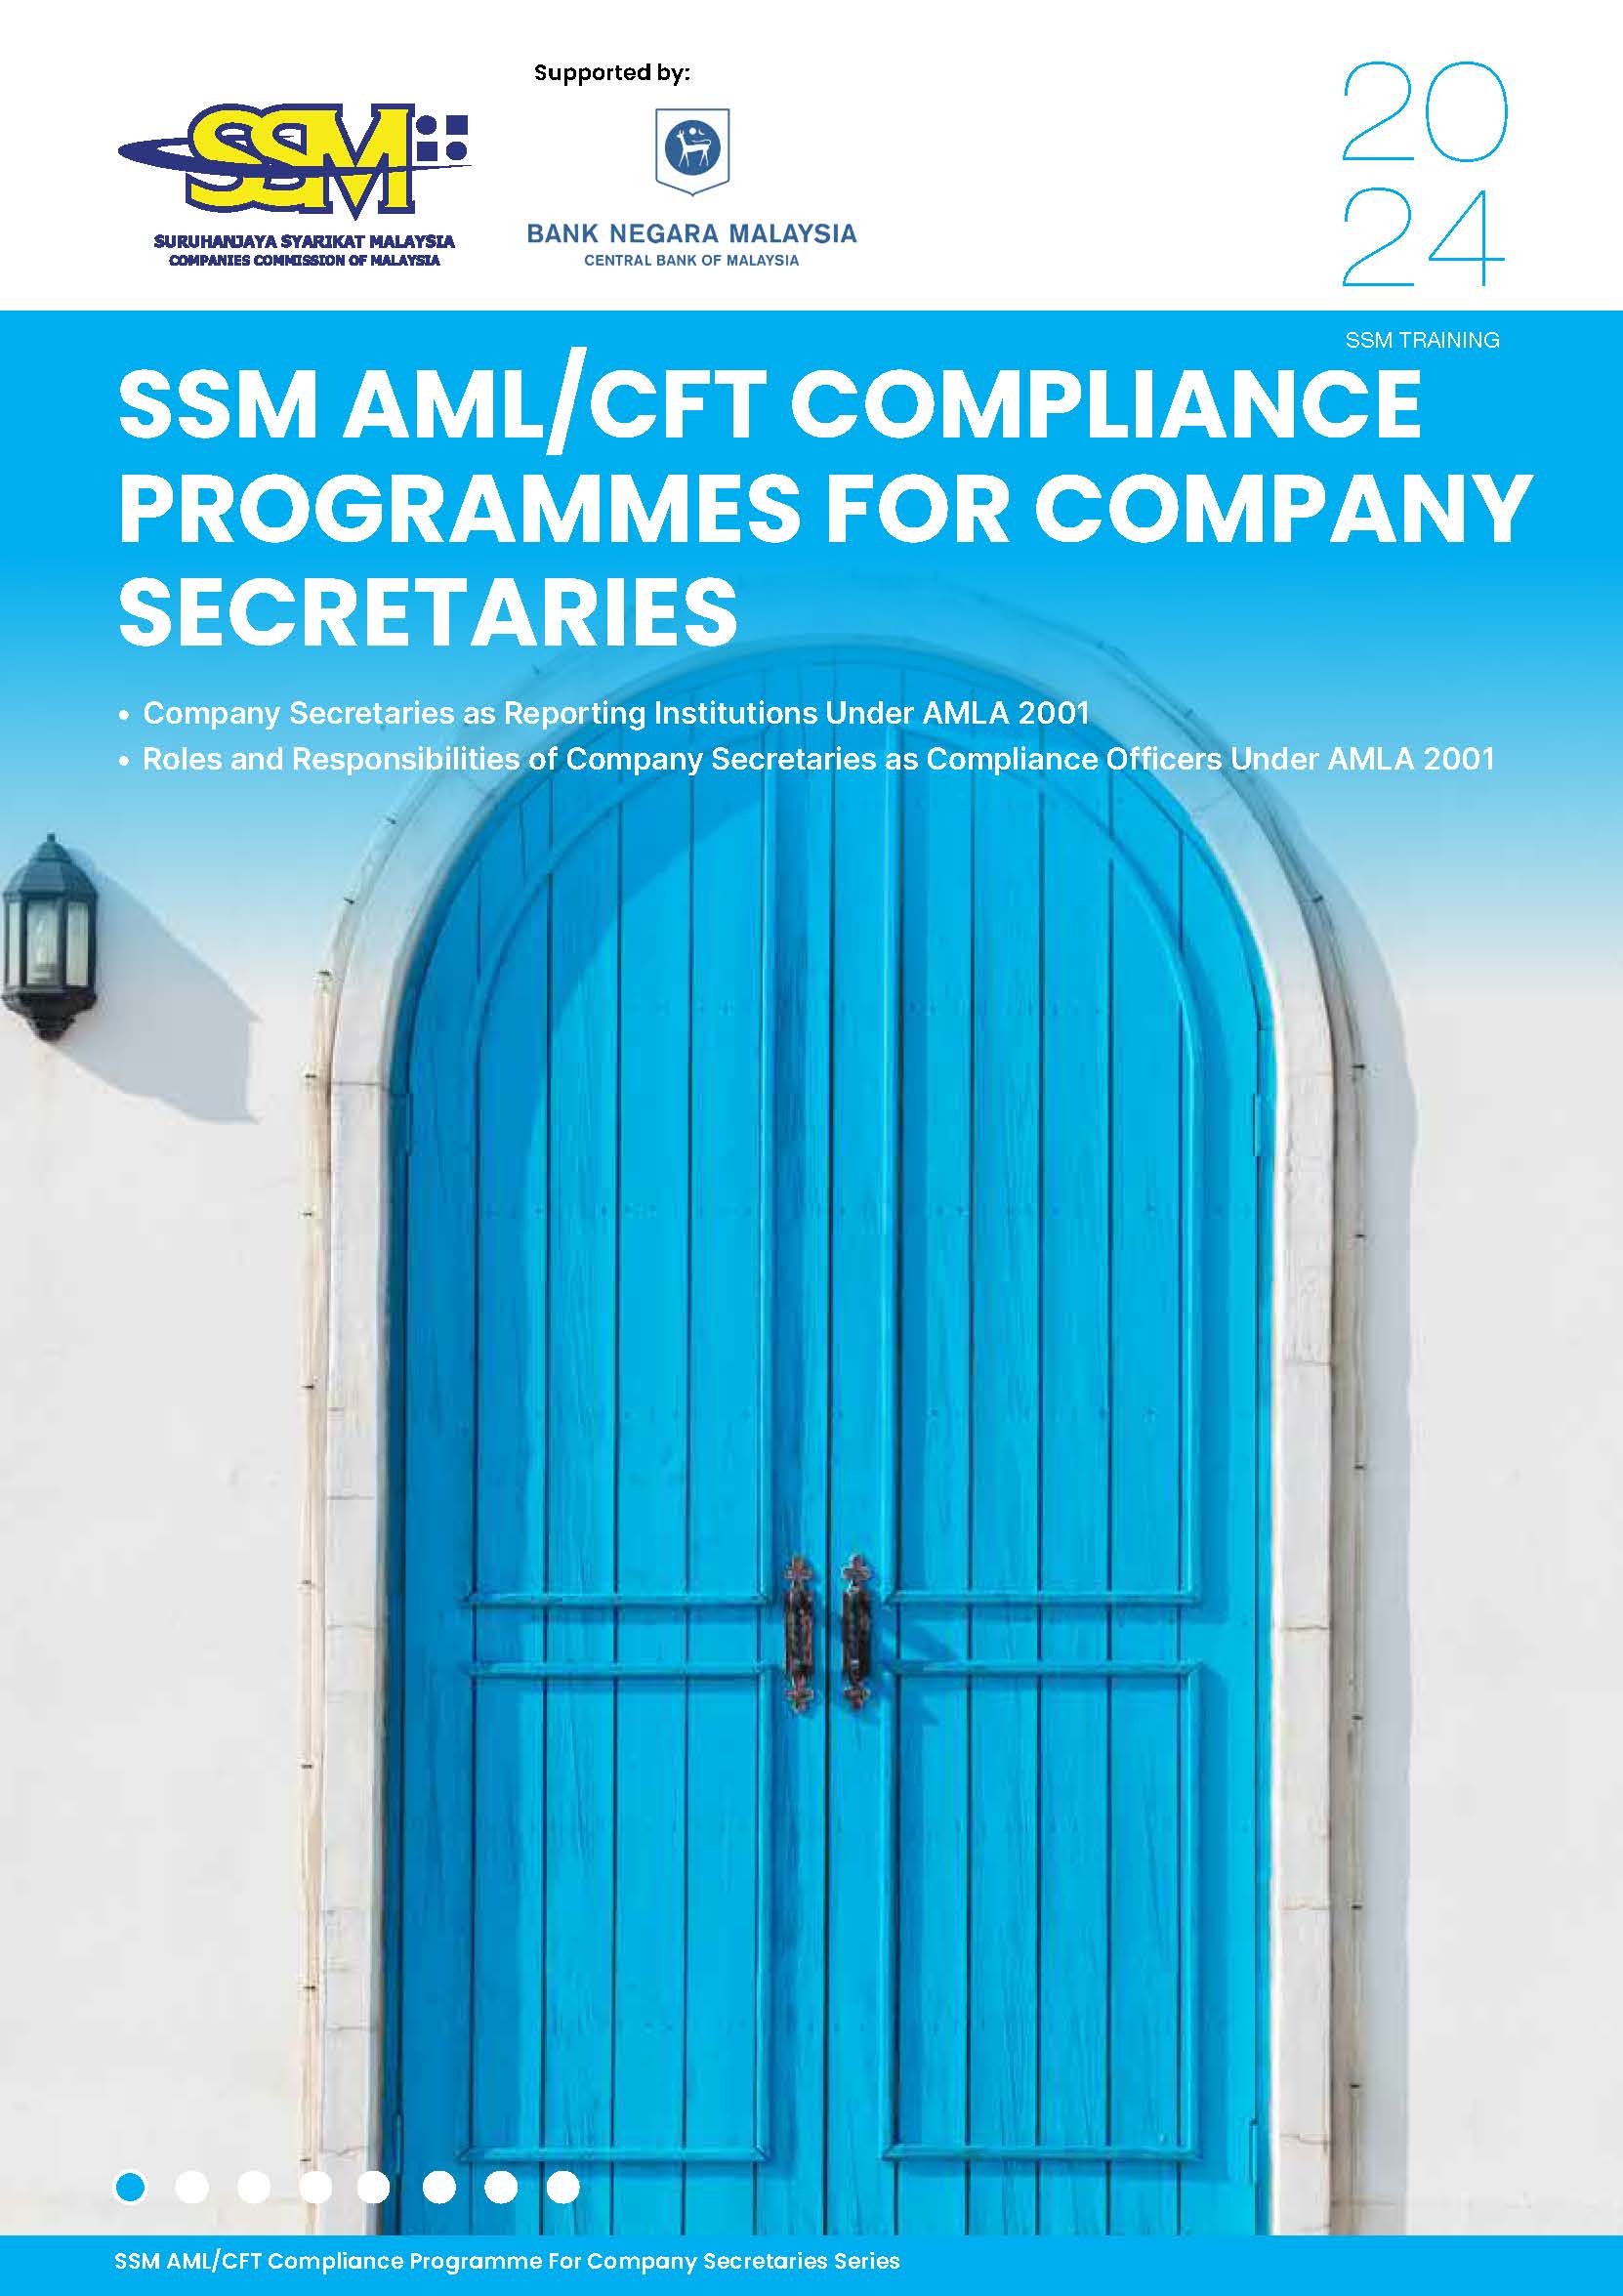 SSM AMLCFT COMPLIANCE PROGRAMMES FOR COMPANY SECRETARIES.jpg